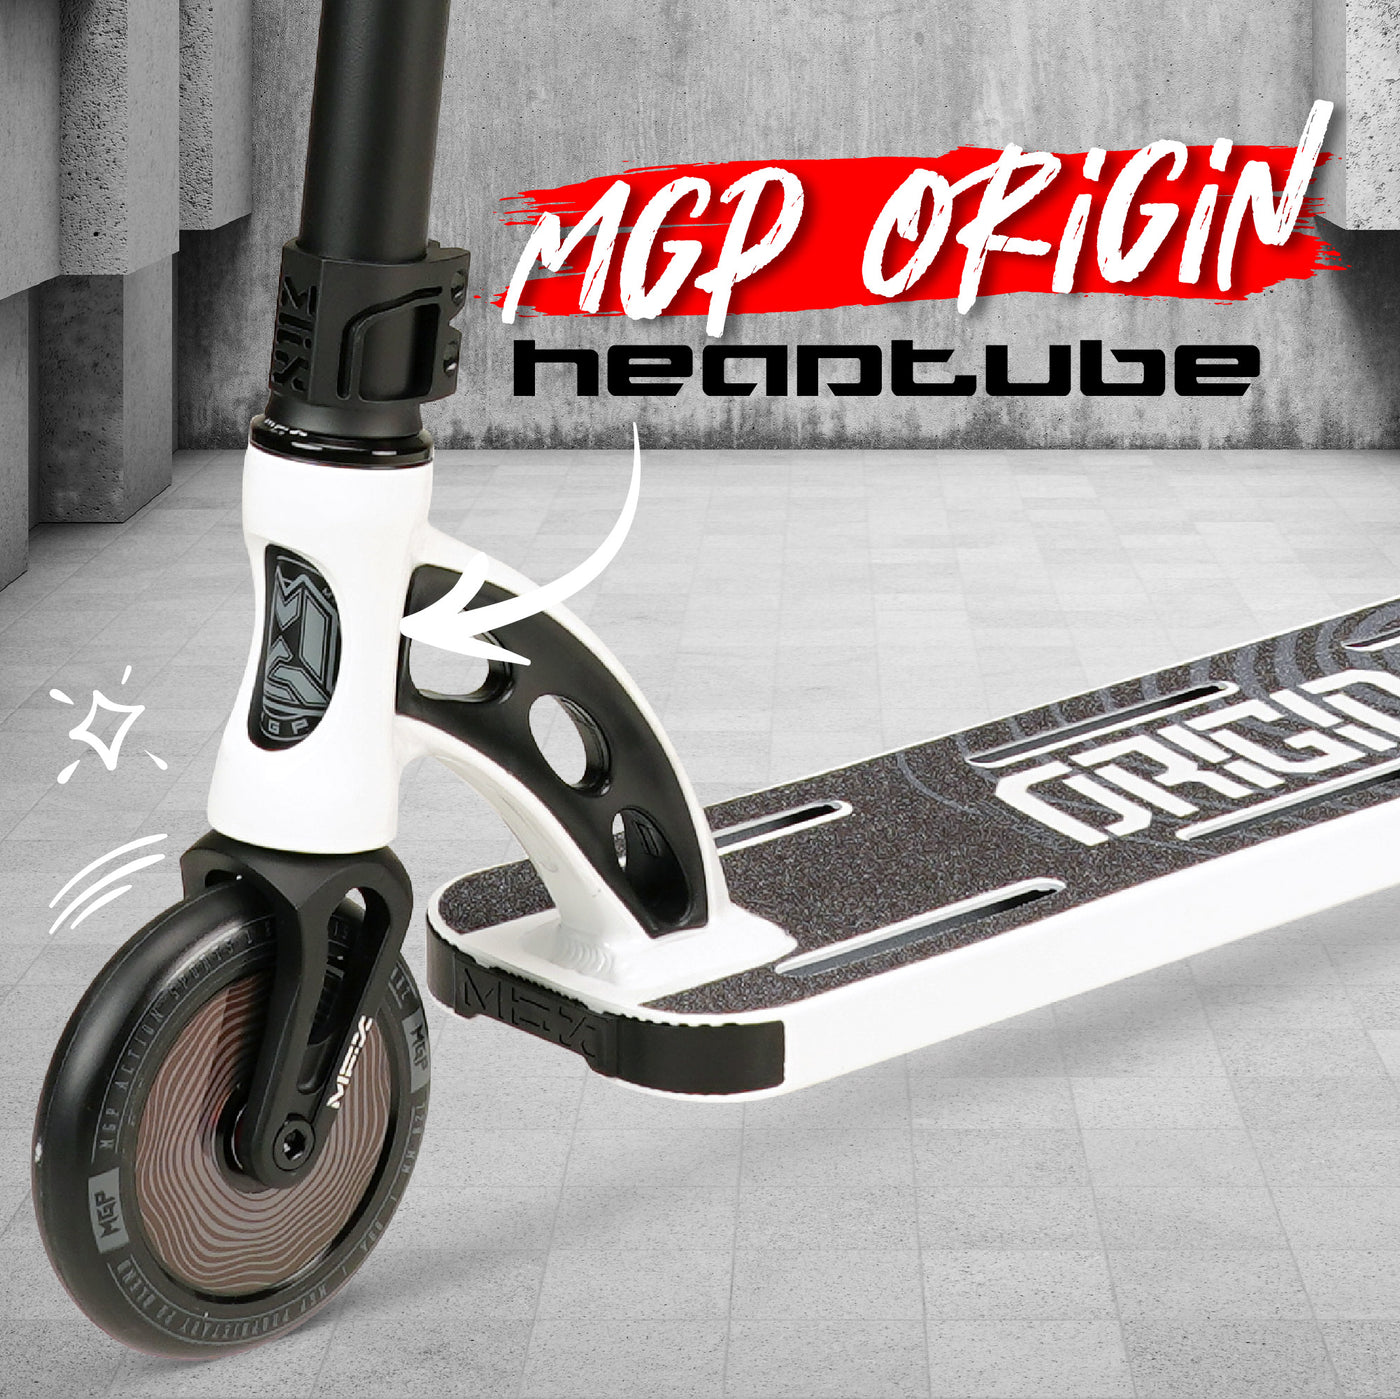 Madd Gear MGP MGO Origin VX10 VX9 Team Pro Stunt Trick Scooter Complete High Quality Best Razor Skate Park White Black Deck Headtube